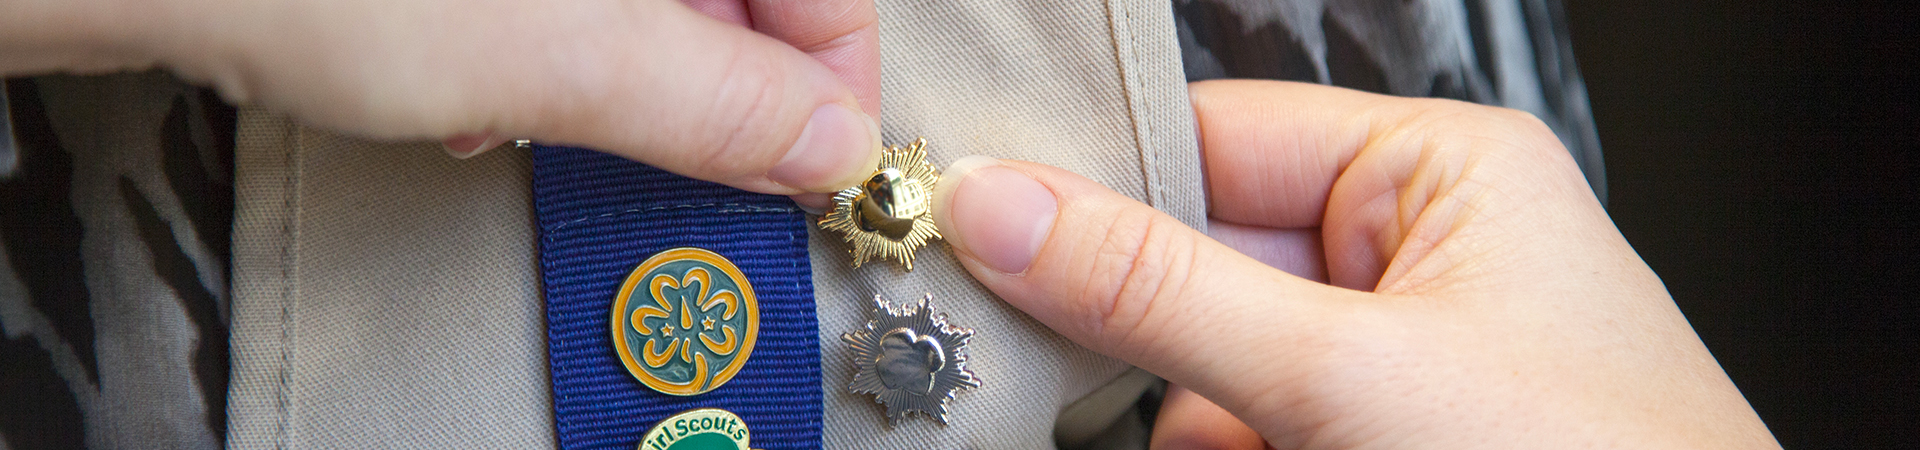  Girl Scout receiving the Gold Award pin 